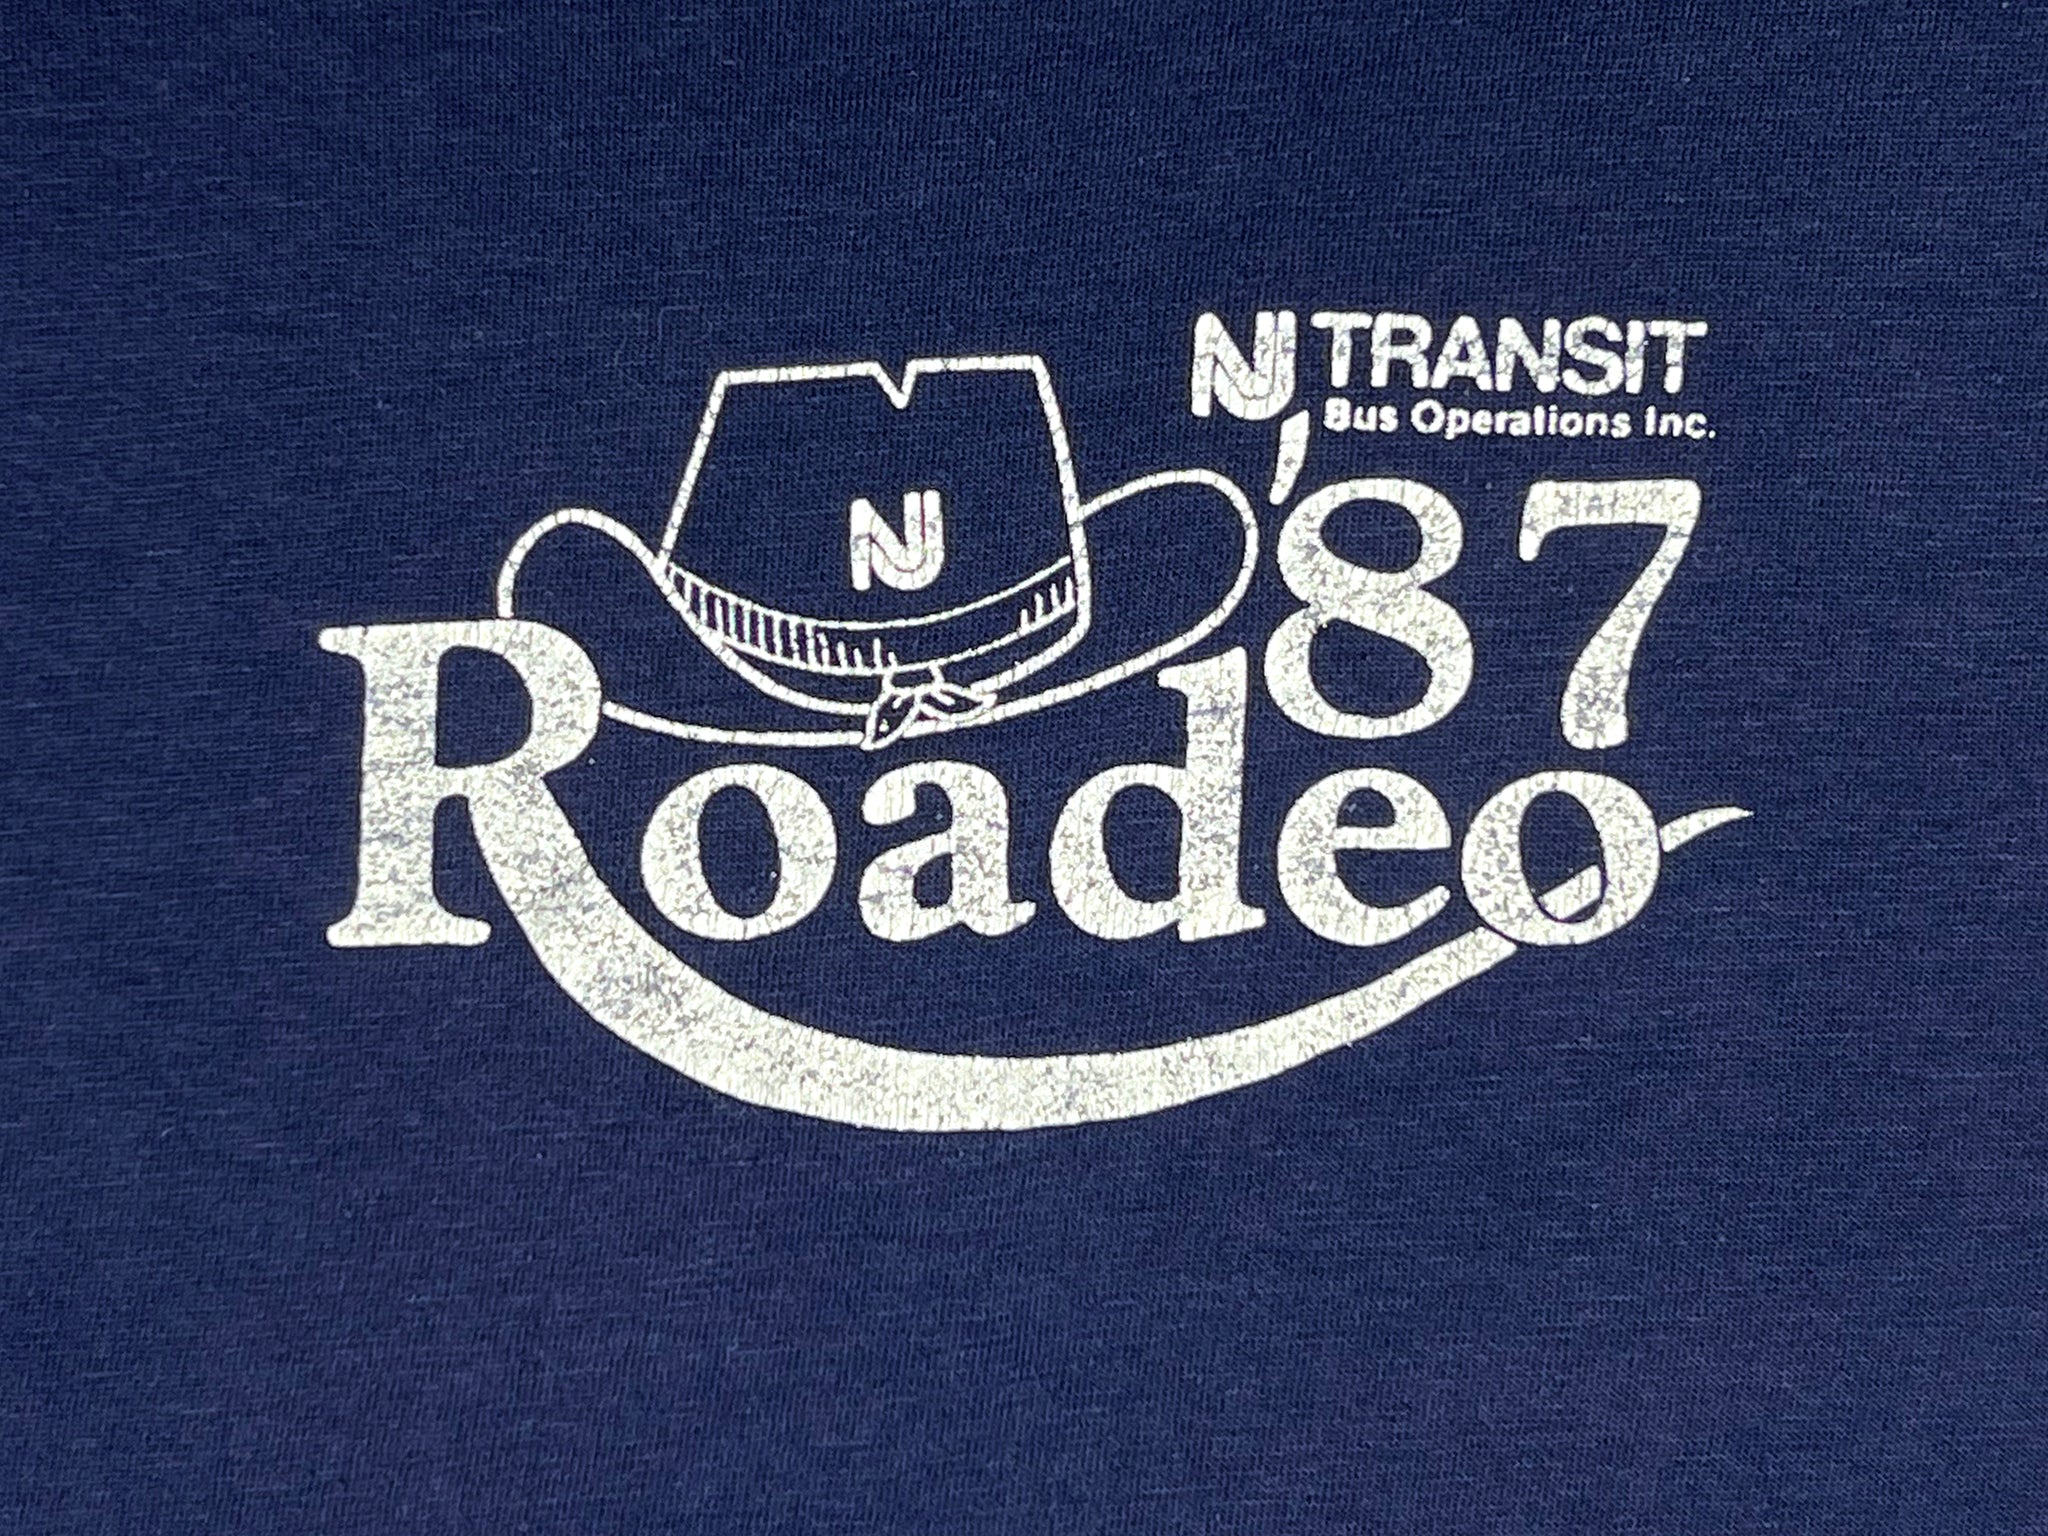 New Jersey Transit Roadeo 1987 T-Shirt